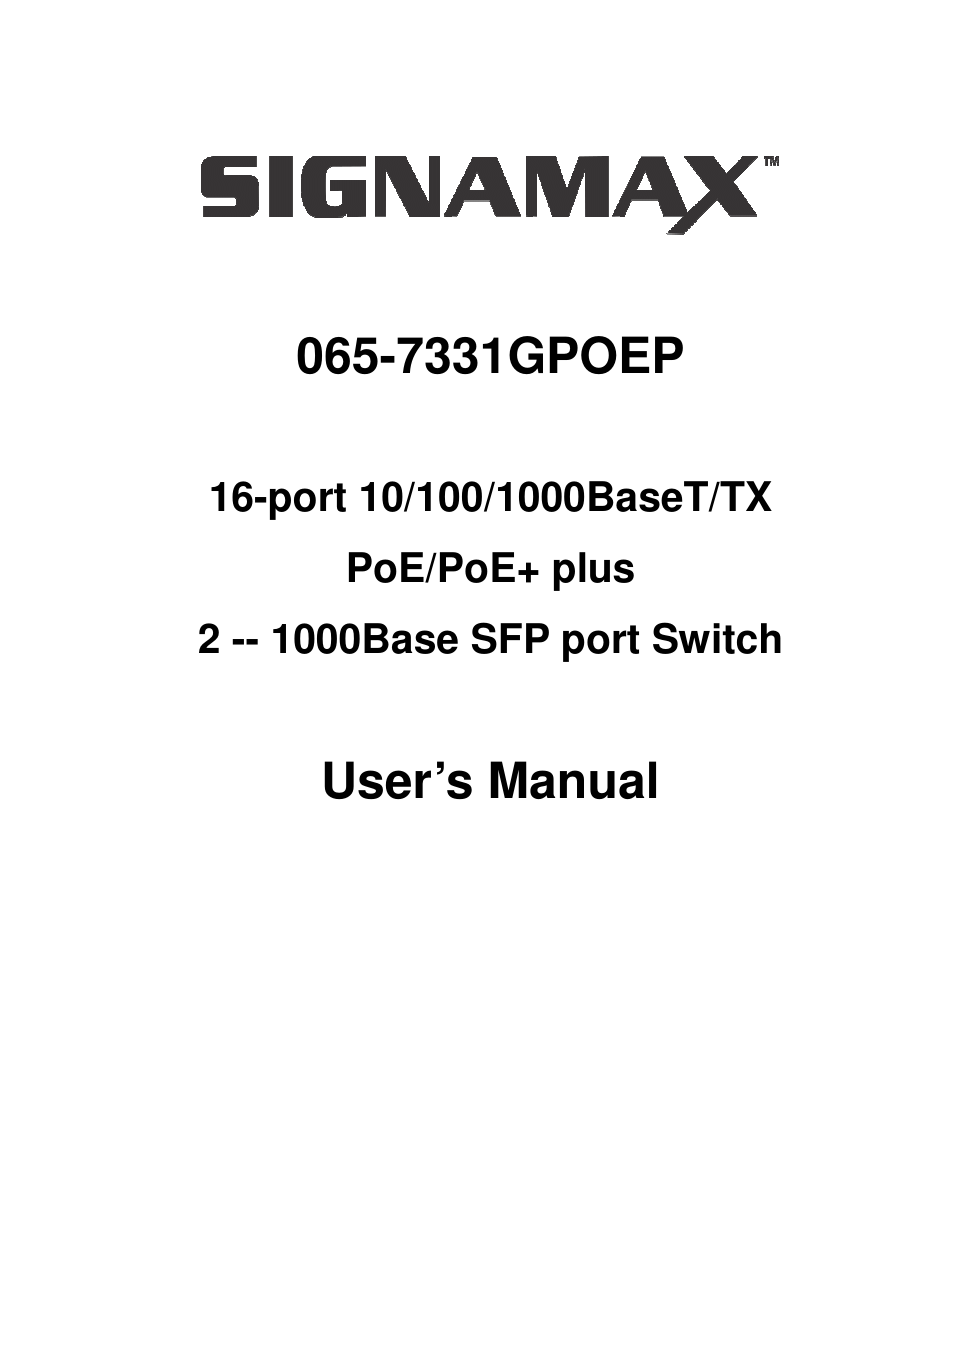 18-Port 10/100/1000BaseT/TX PoE+ Switch with 16 PoE/PoE+ Ports plus 2 Gigabit SFP Ports